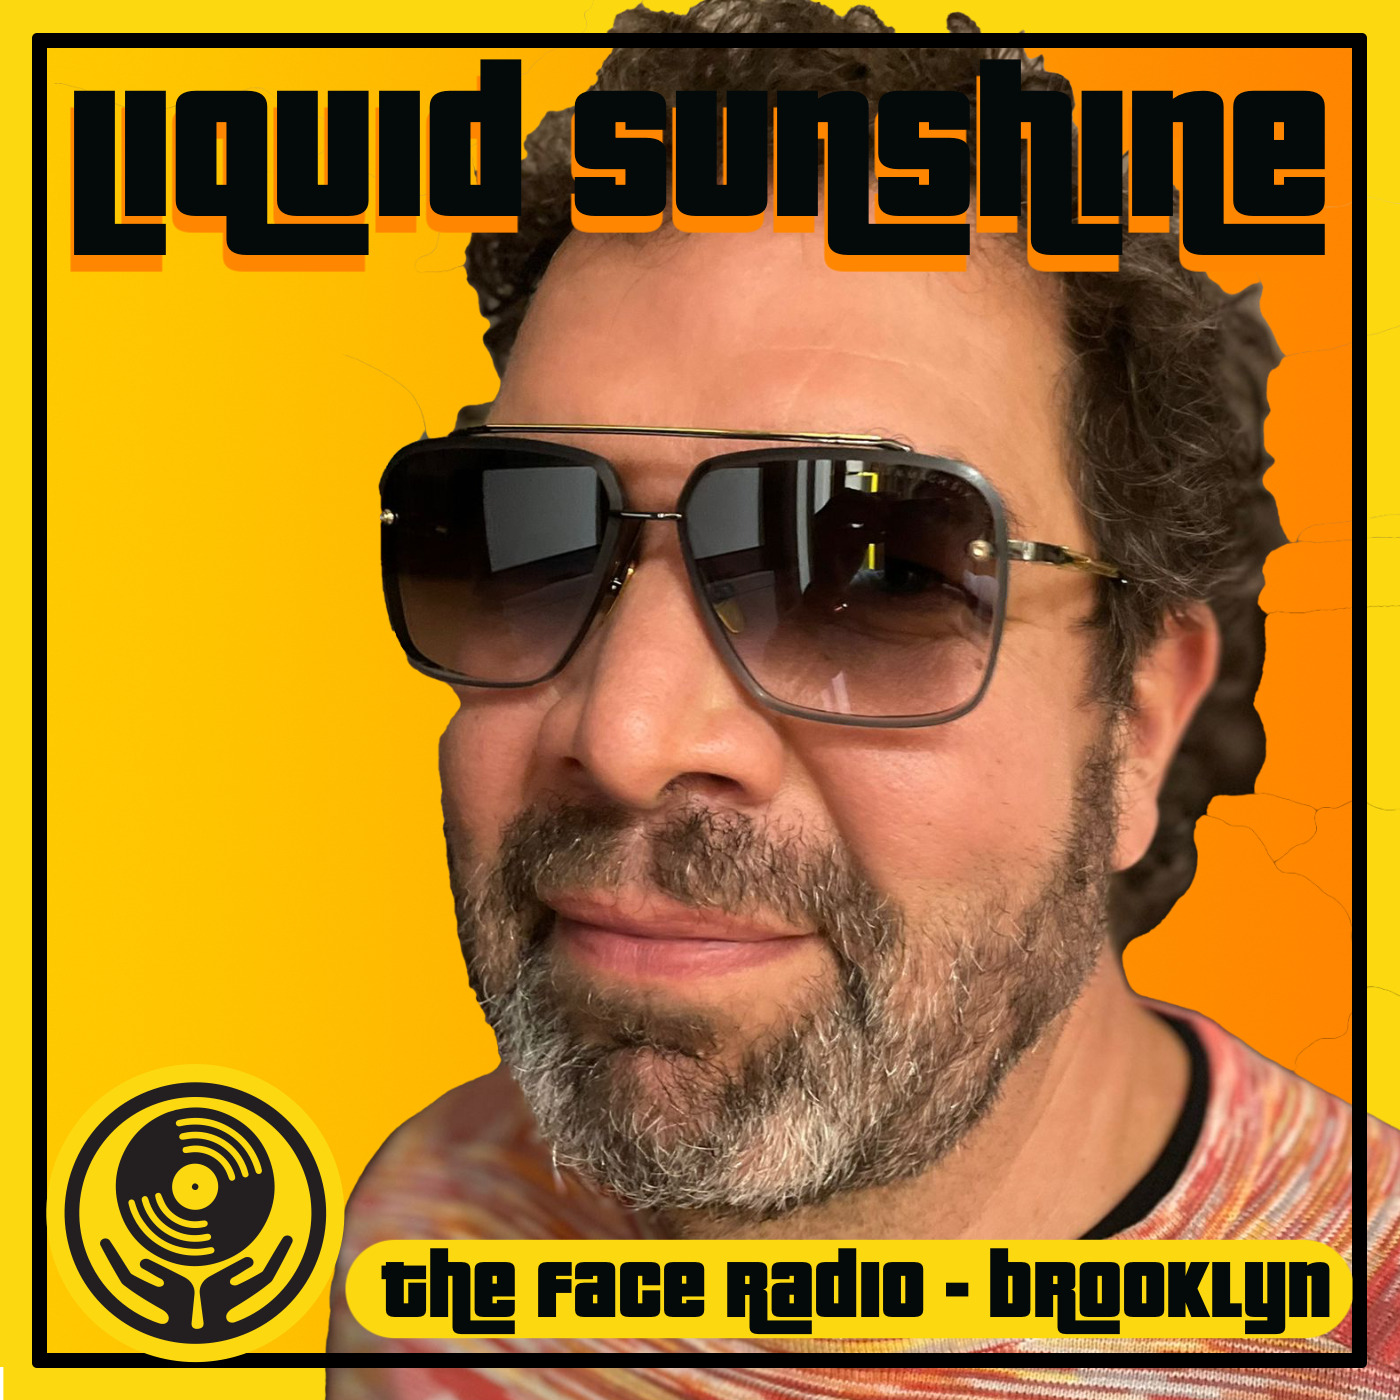 Future Jazz Candy - Liquid Sunshine @ The Face Radio - Show #165